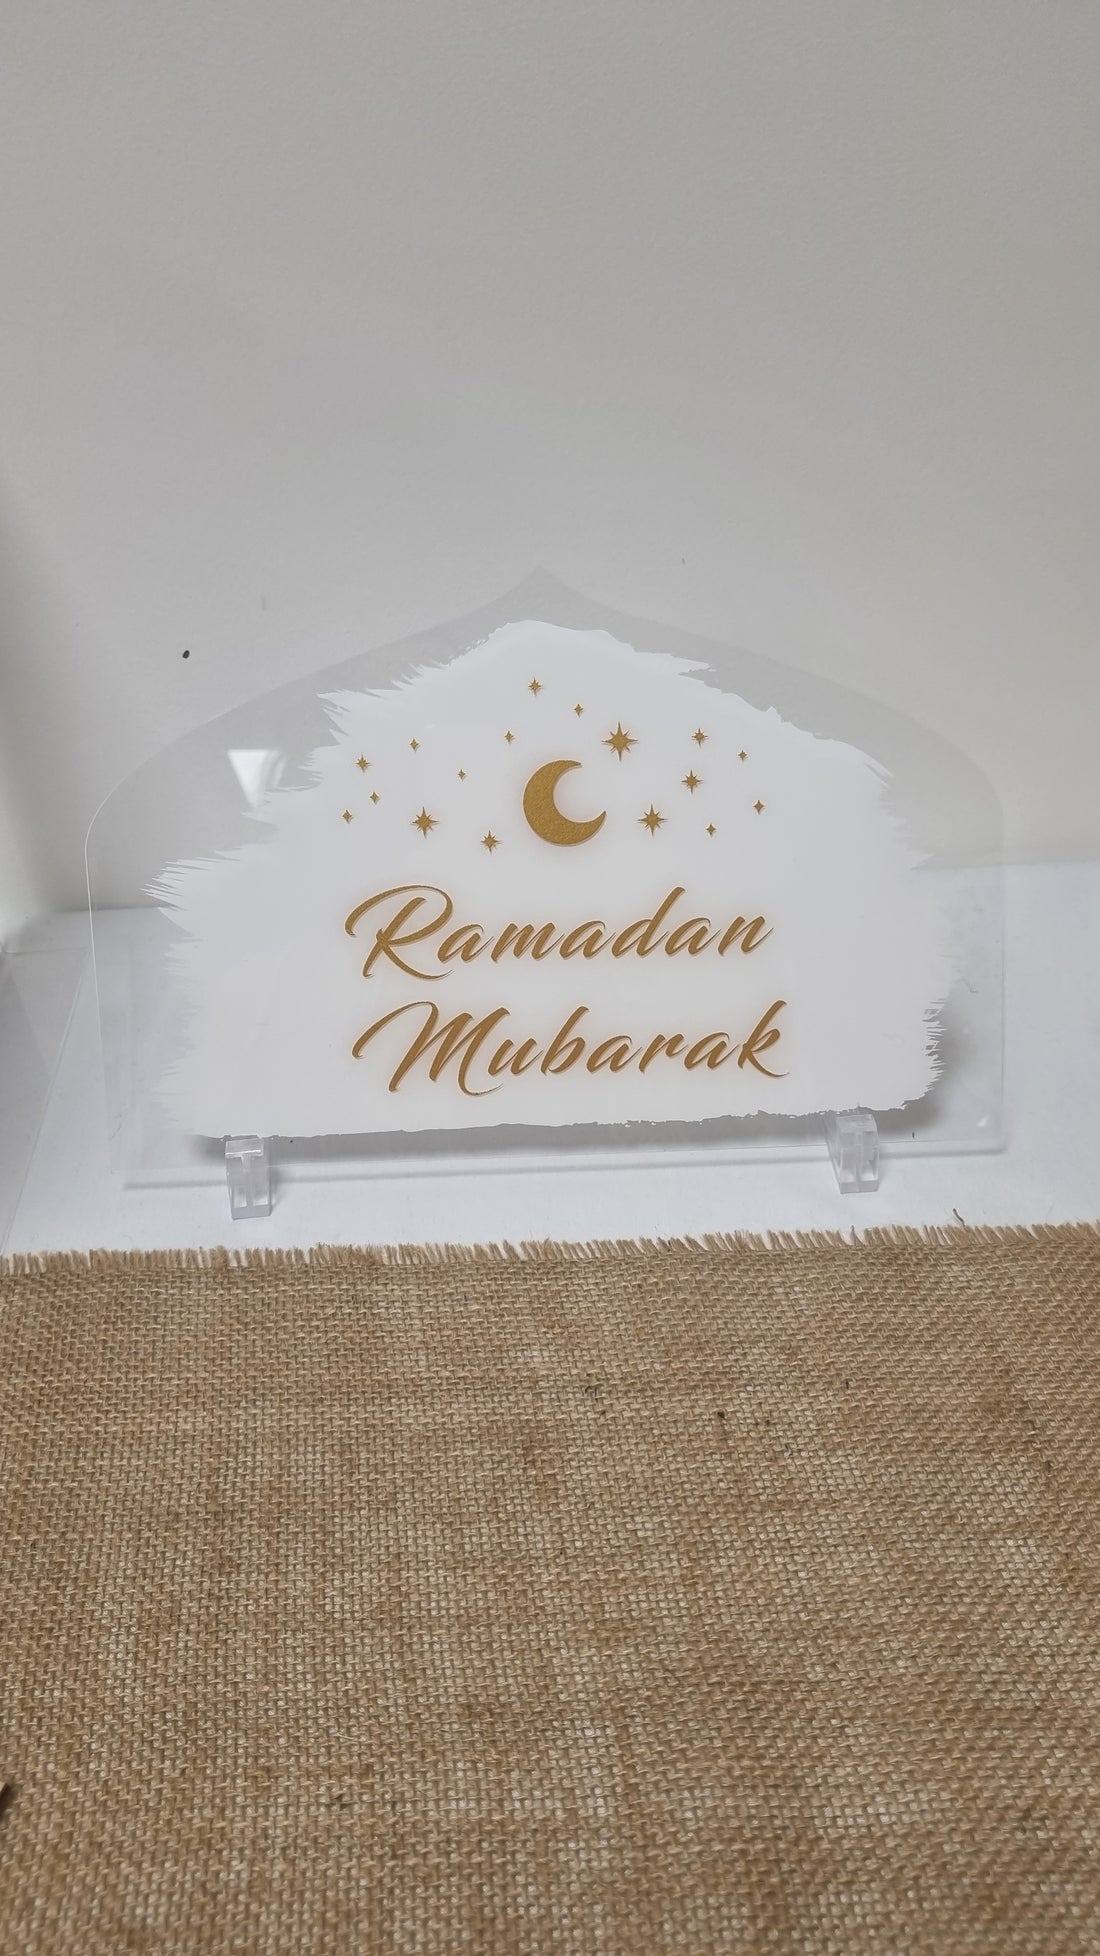 Ramadan Mubarak decoration - Transparent acrylic and gold glitter